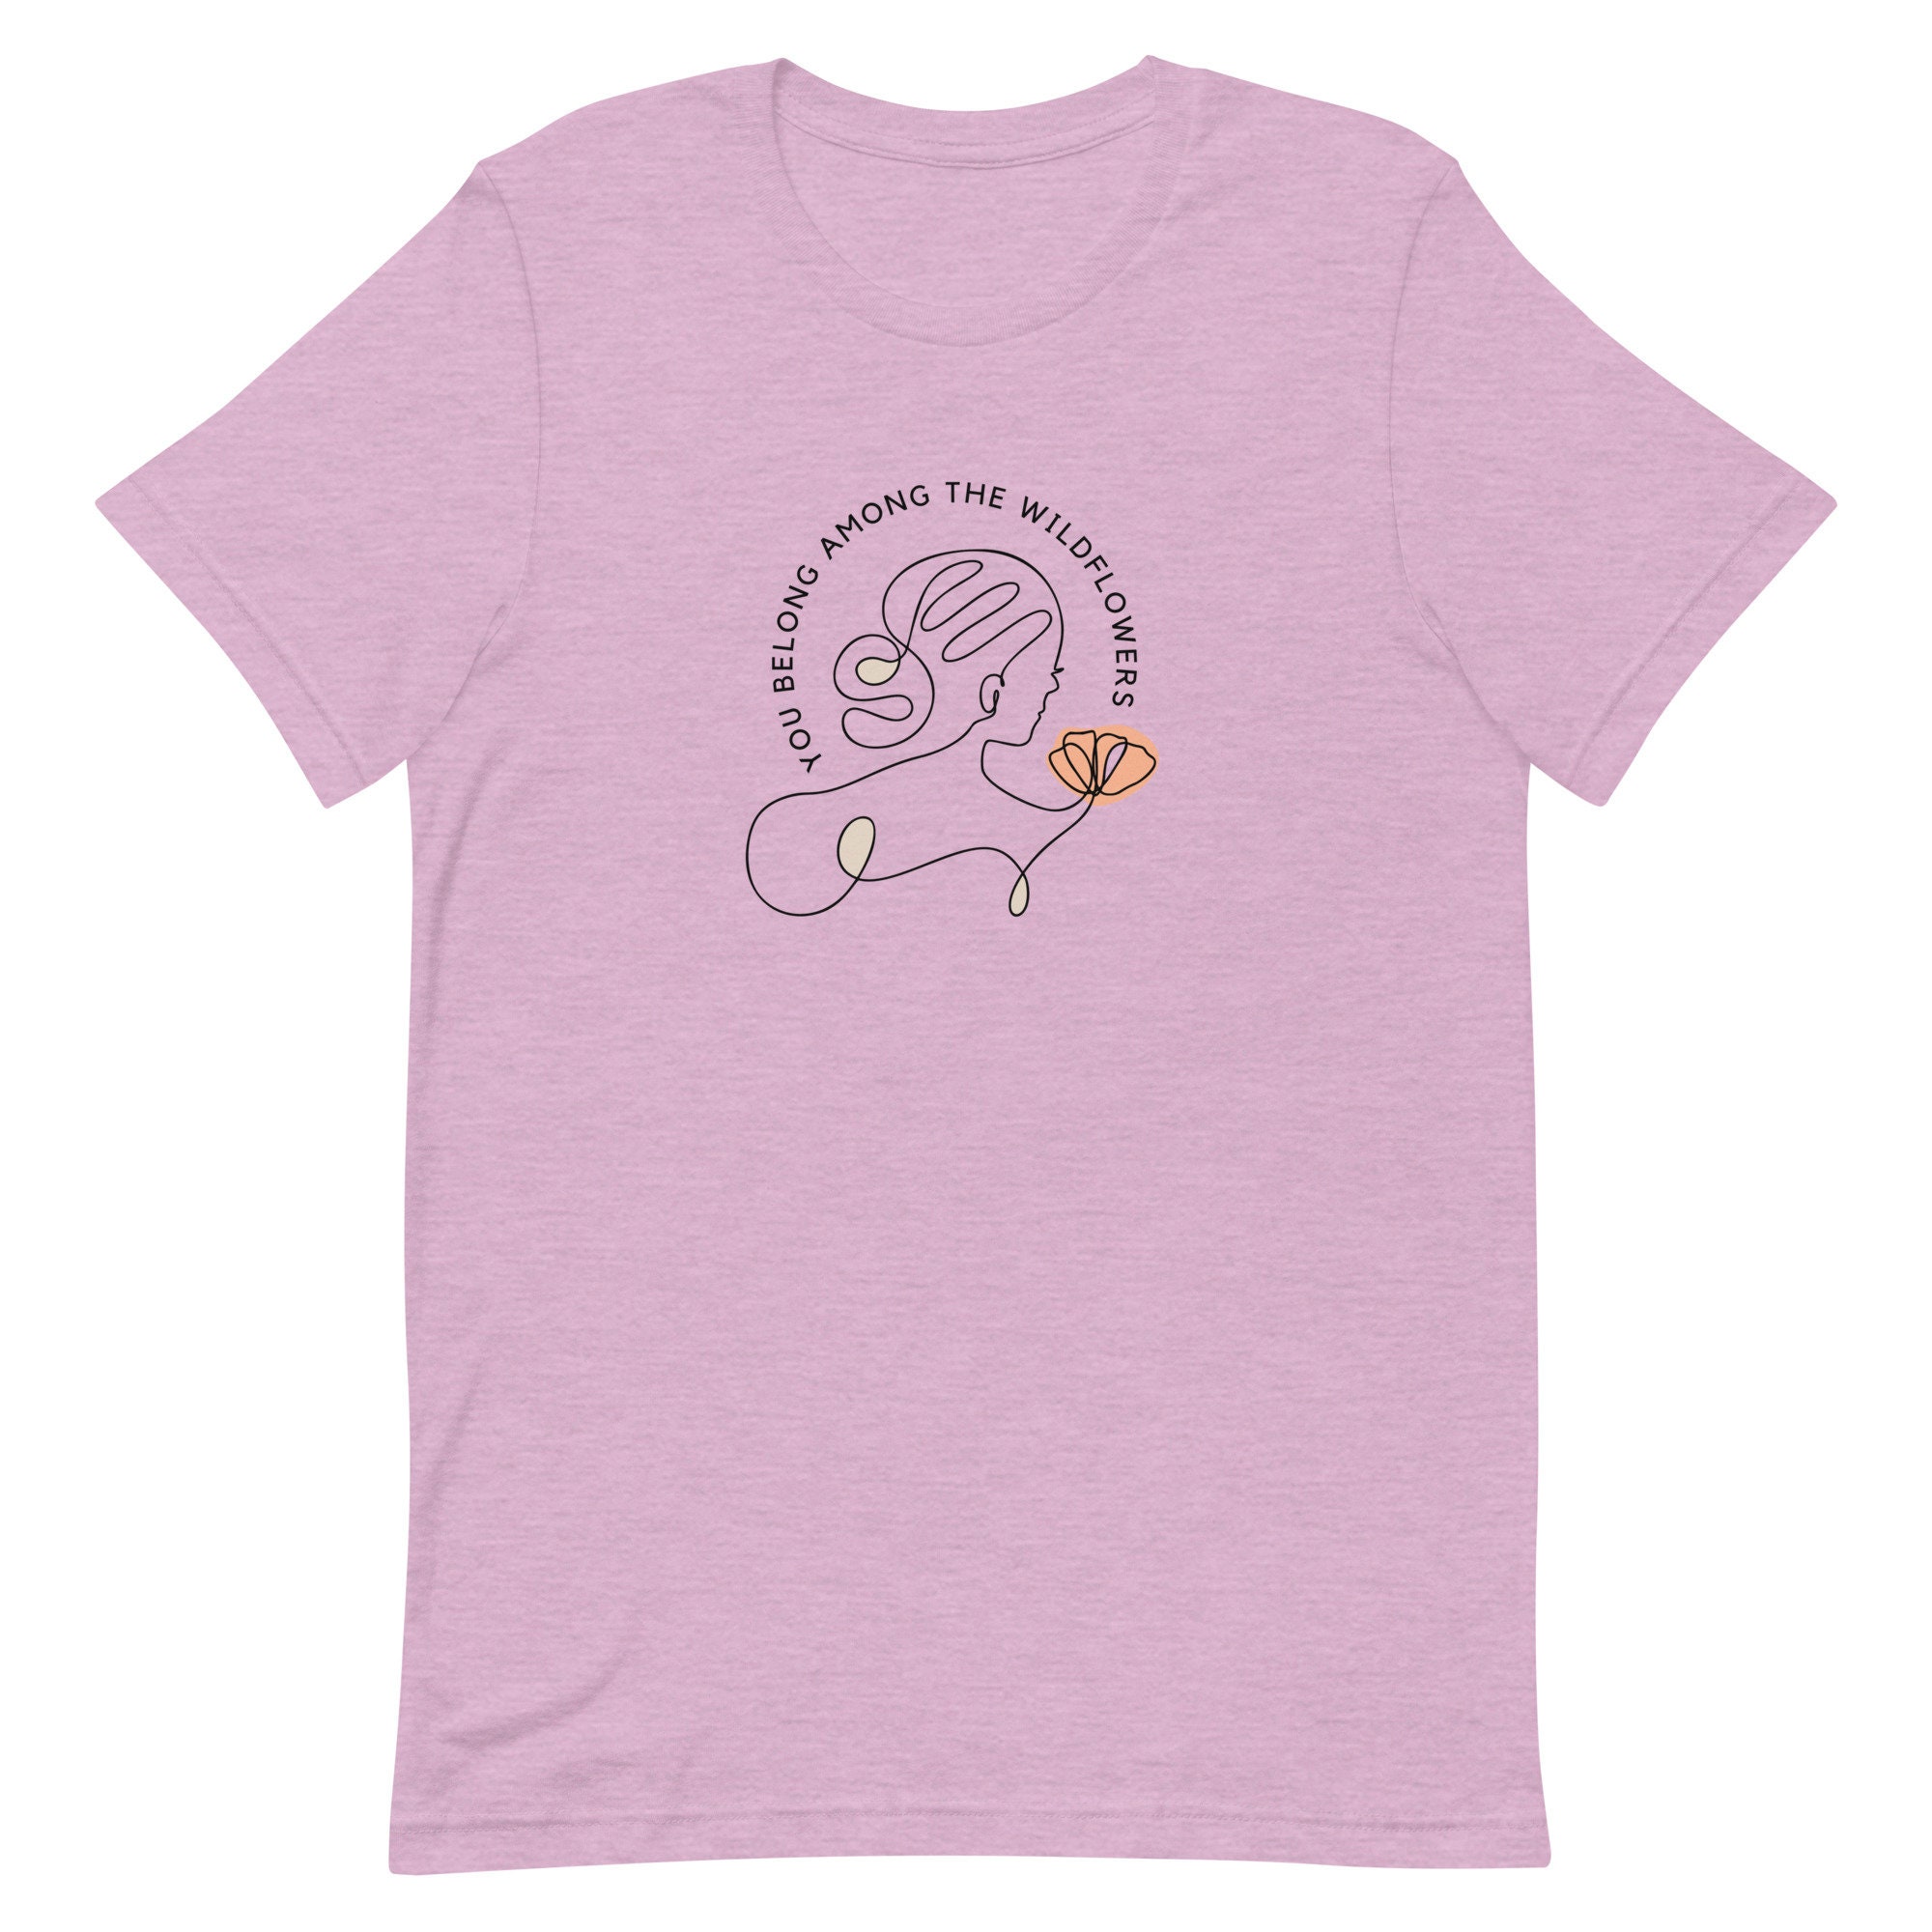 Tom Petty Fan Shirt Wildflowers Graphic Tee Flower Girl | Etsy